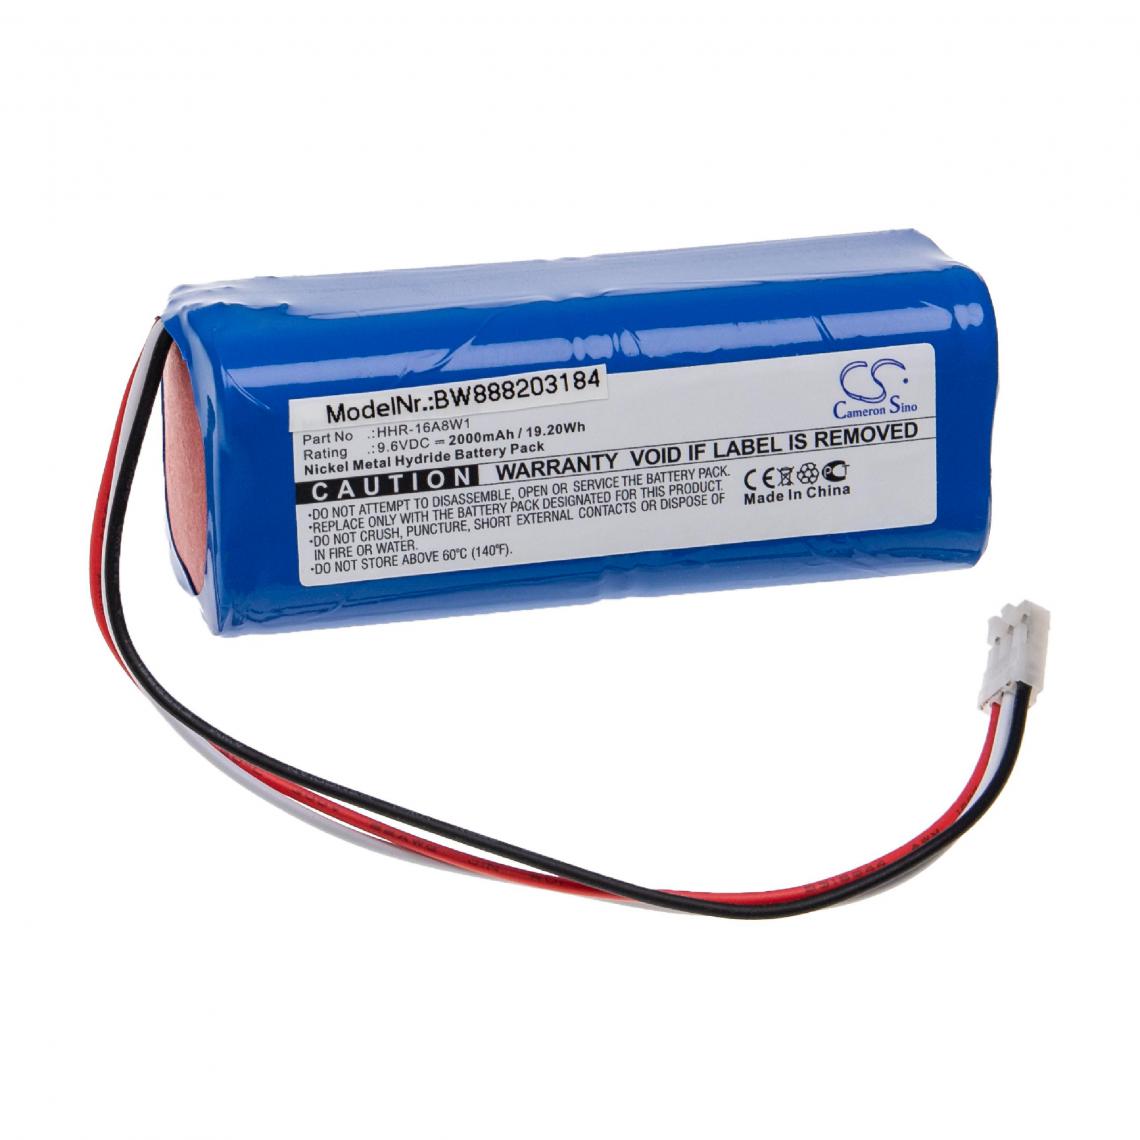 Vhbw - vhbw Batterie compatible avec Fukuda Cardisuny C120, ECG Cardisuny C120, ME Cardisuny C120 appareil médical (2000mAh, 9,6V, NiMH) - Piles spécifiques